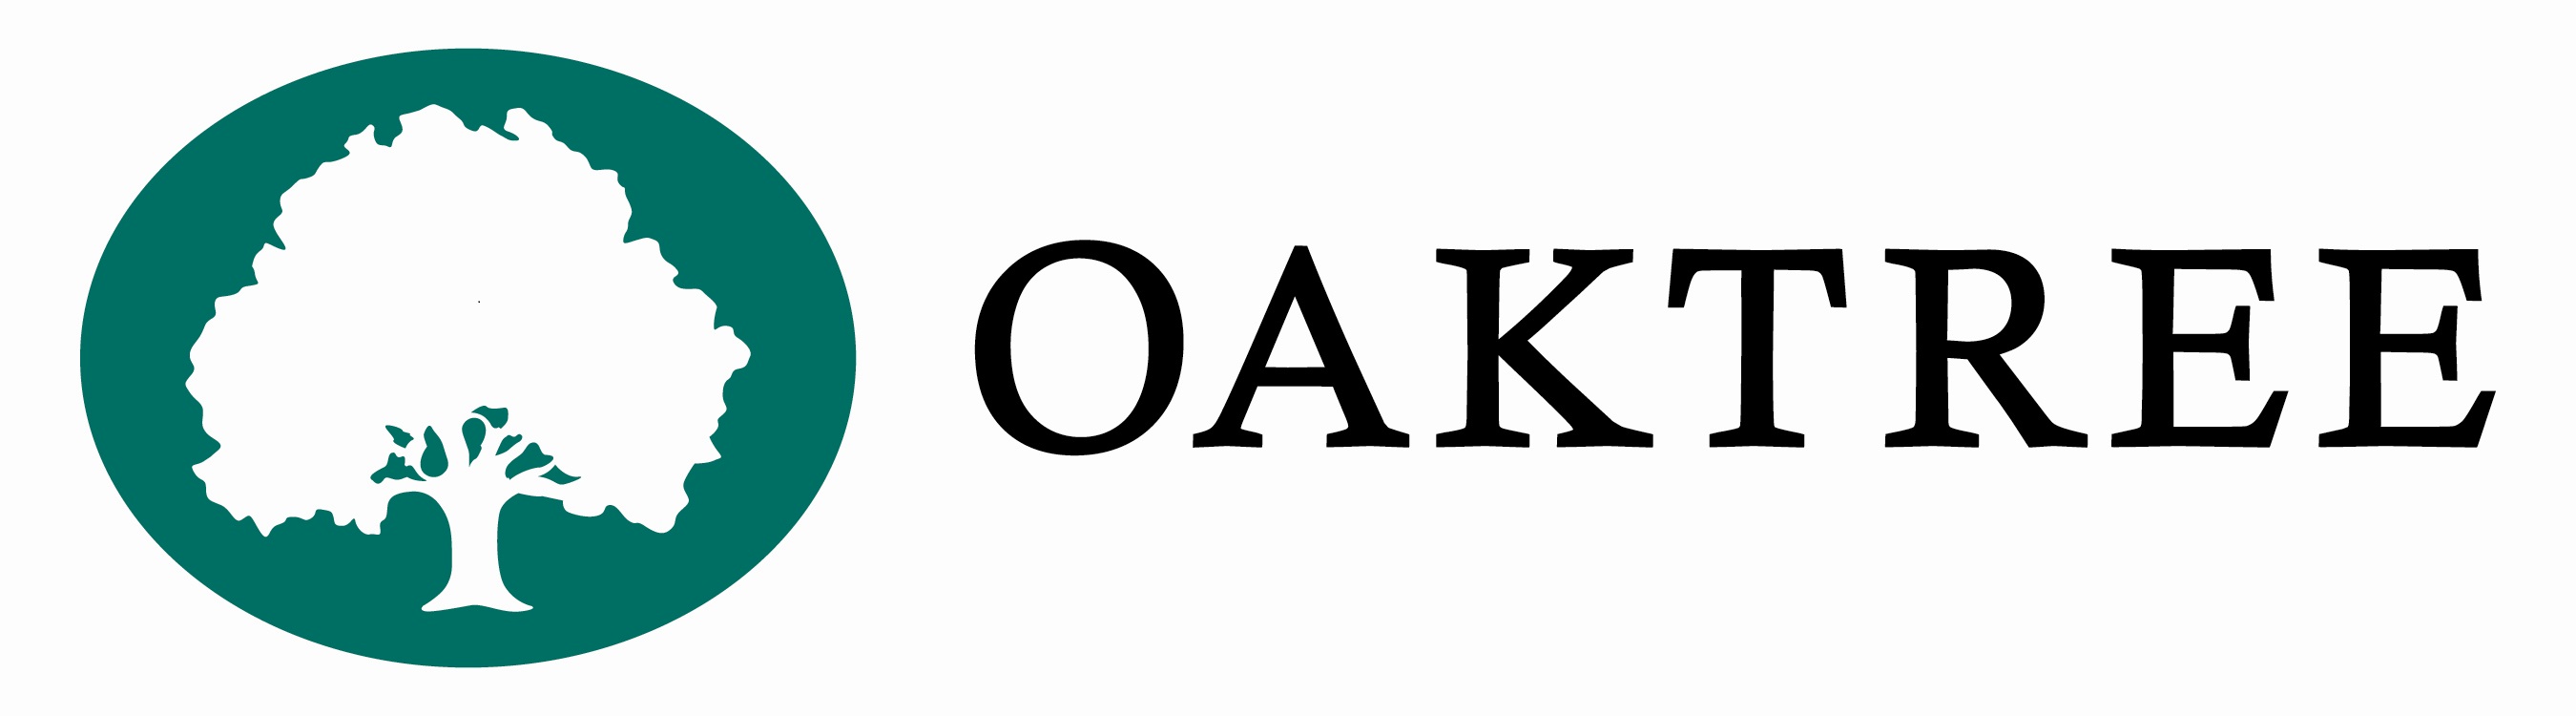 Oaktree Capital Brand Logo